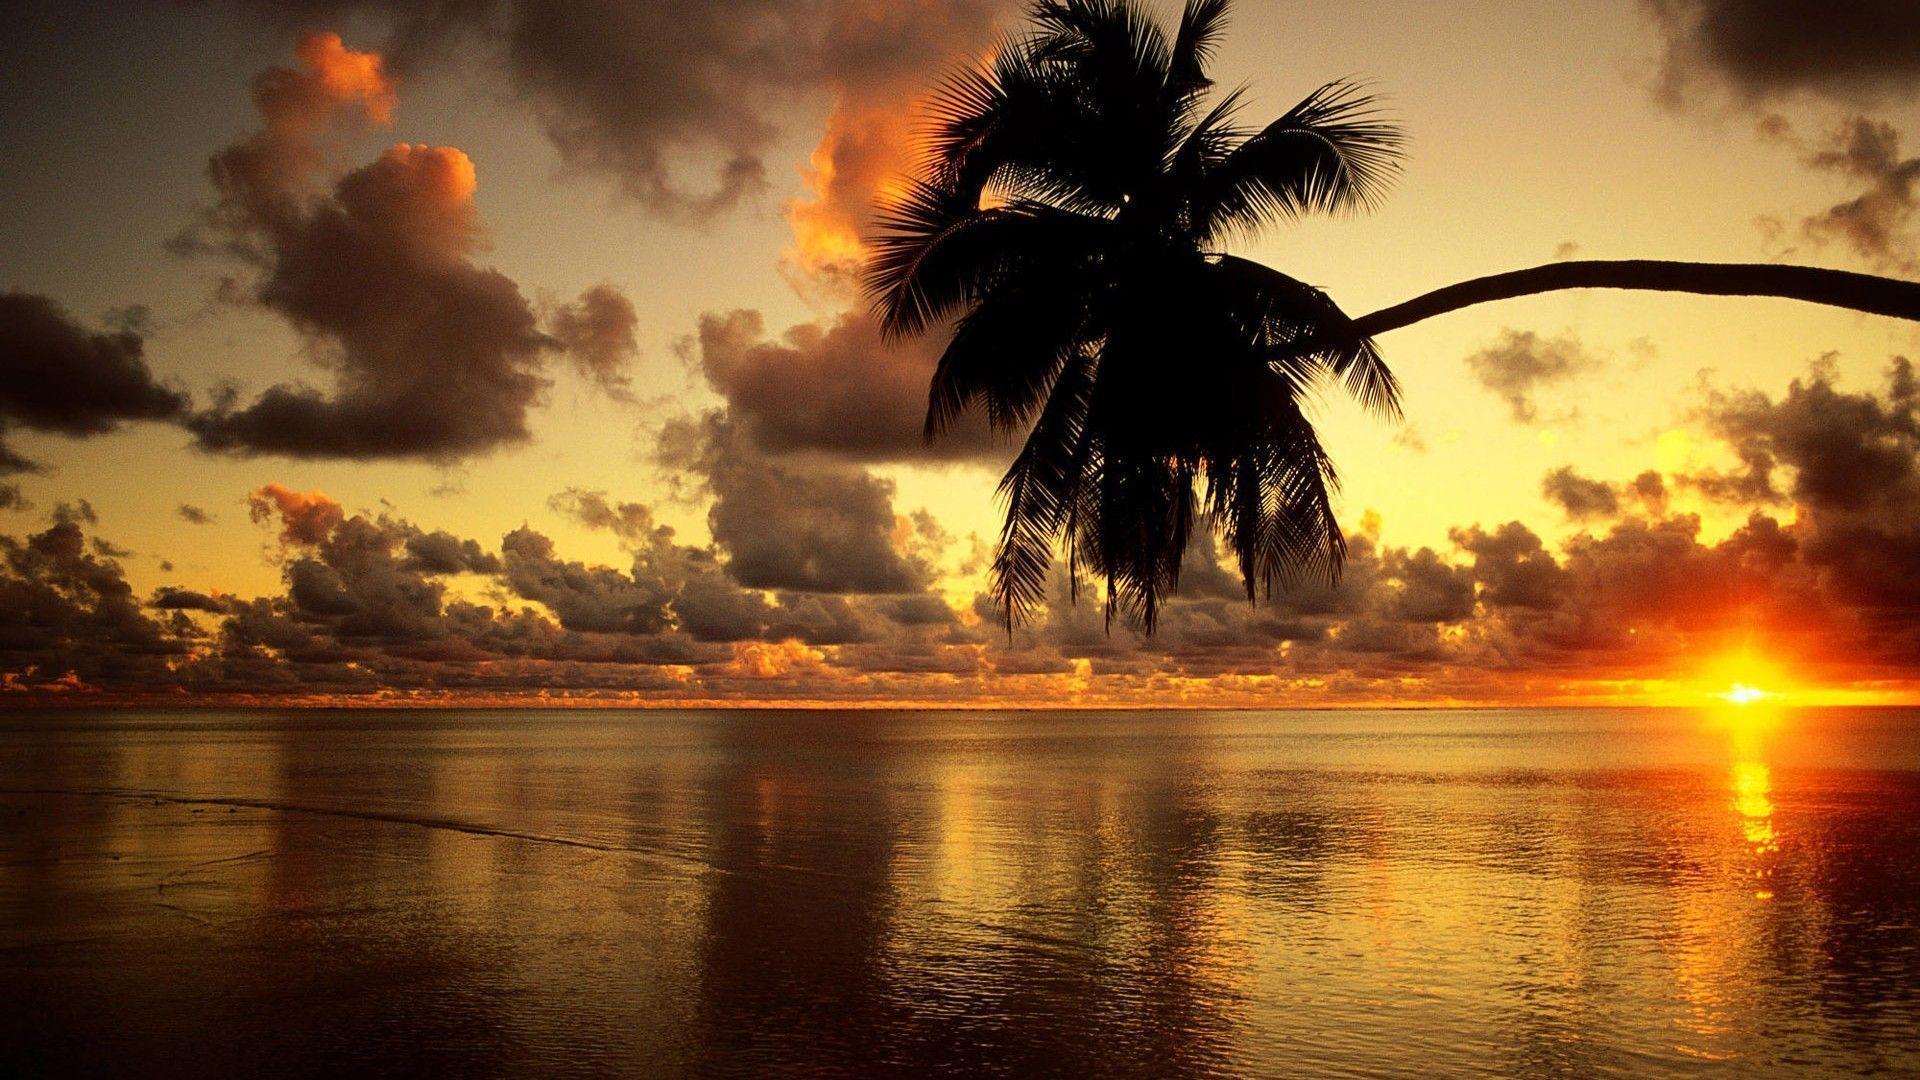 Beach Sunrise Wallpaper Desktop Image & Picture